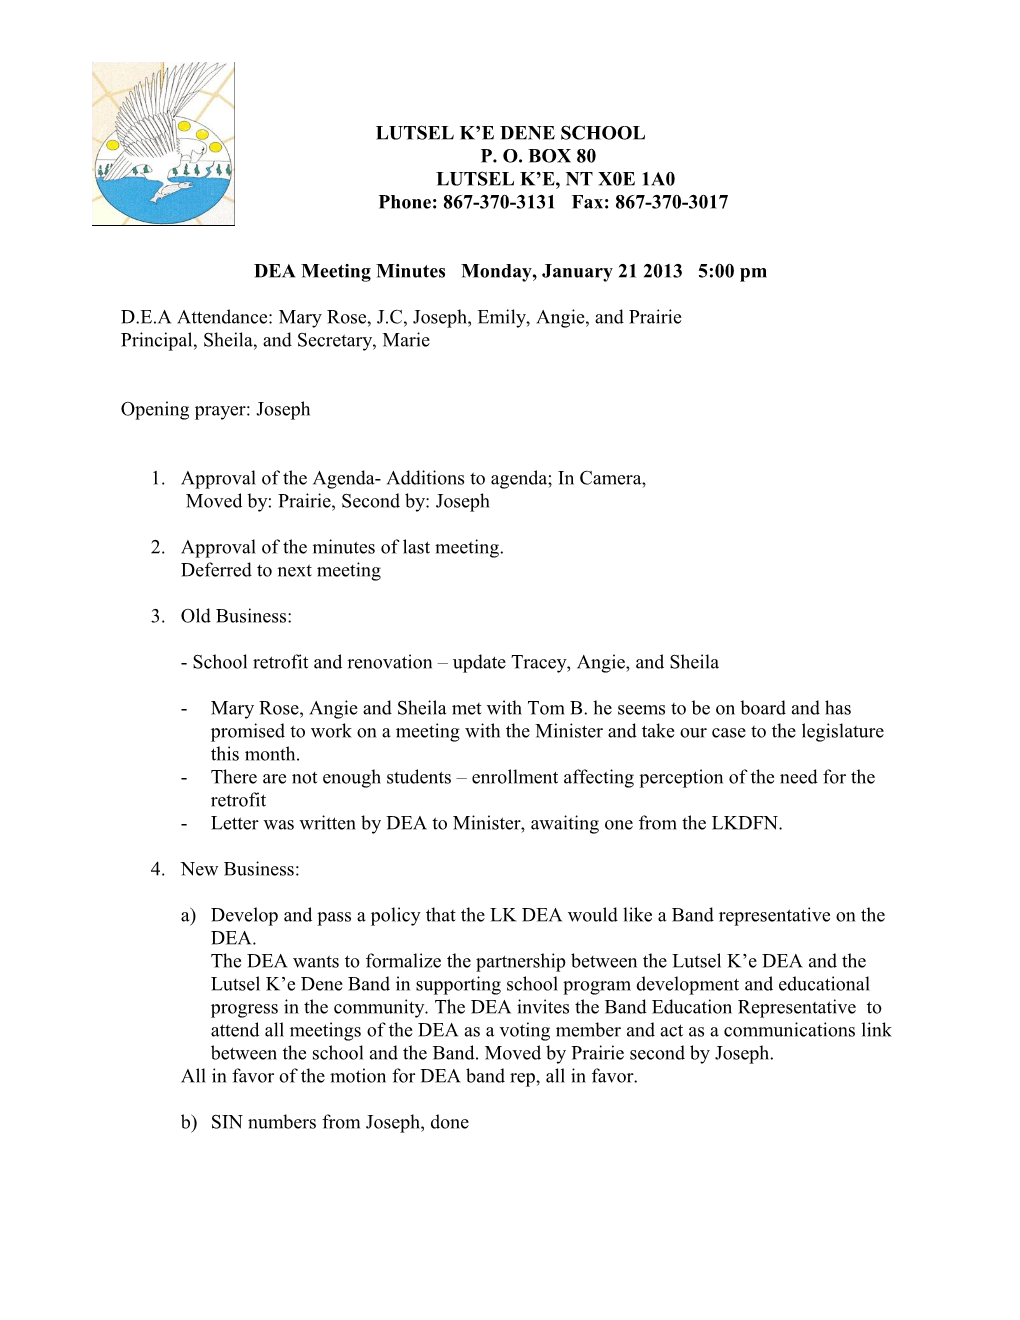 DEA Meeting Minutes Monday, January 21 2013 5:00 Pm